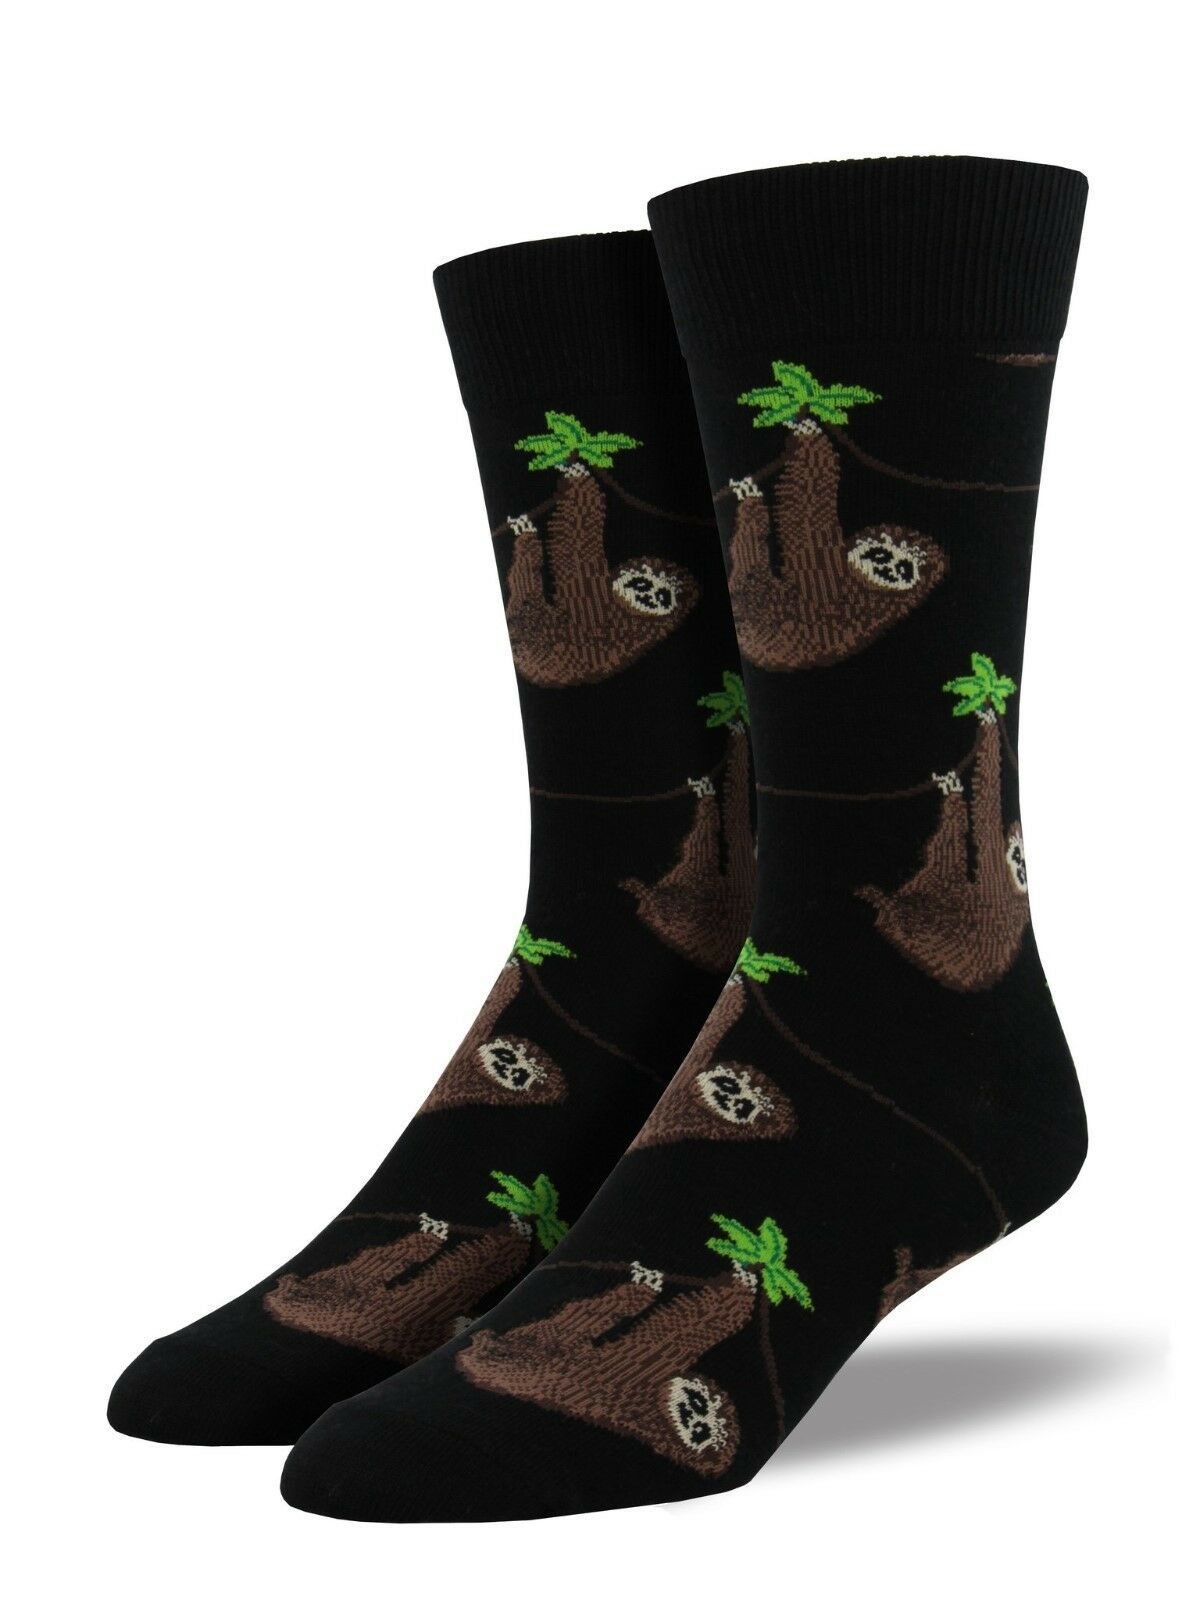 Socksmith Men’s Socks Novelty Crew Cut Socks "Sloth" / Choose Your Color!! - $12.39